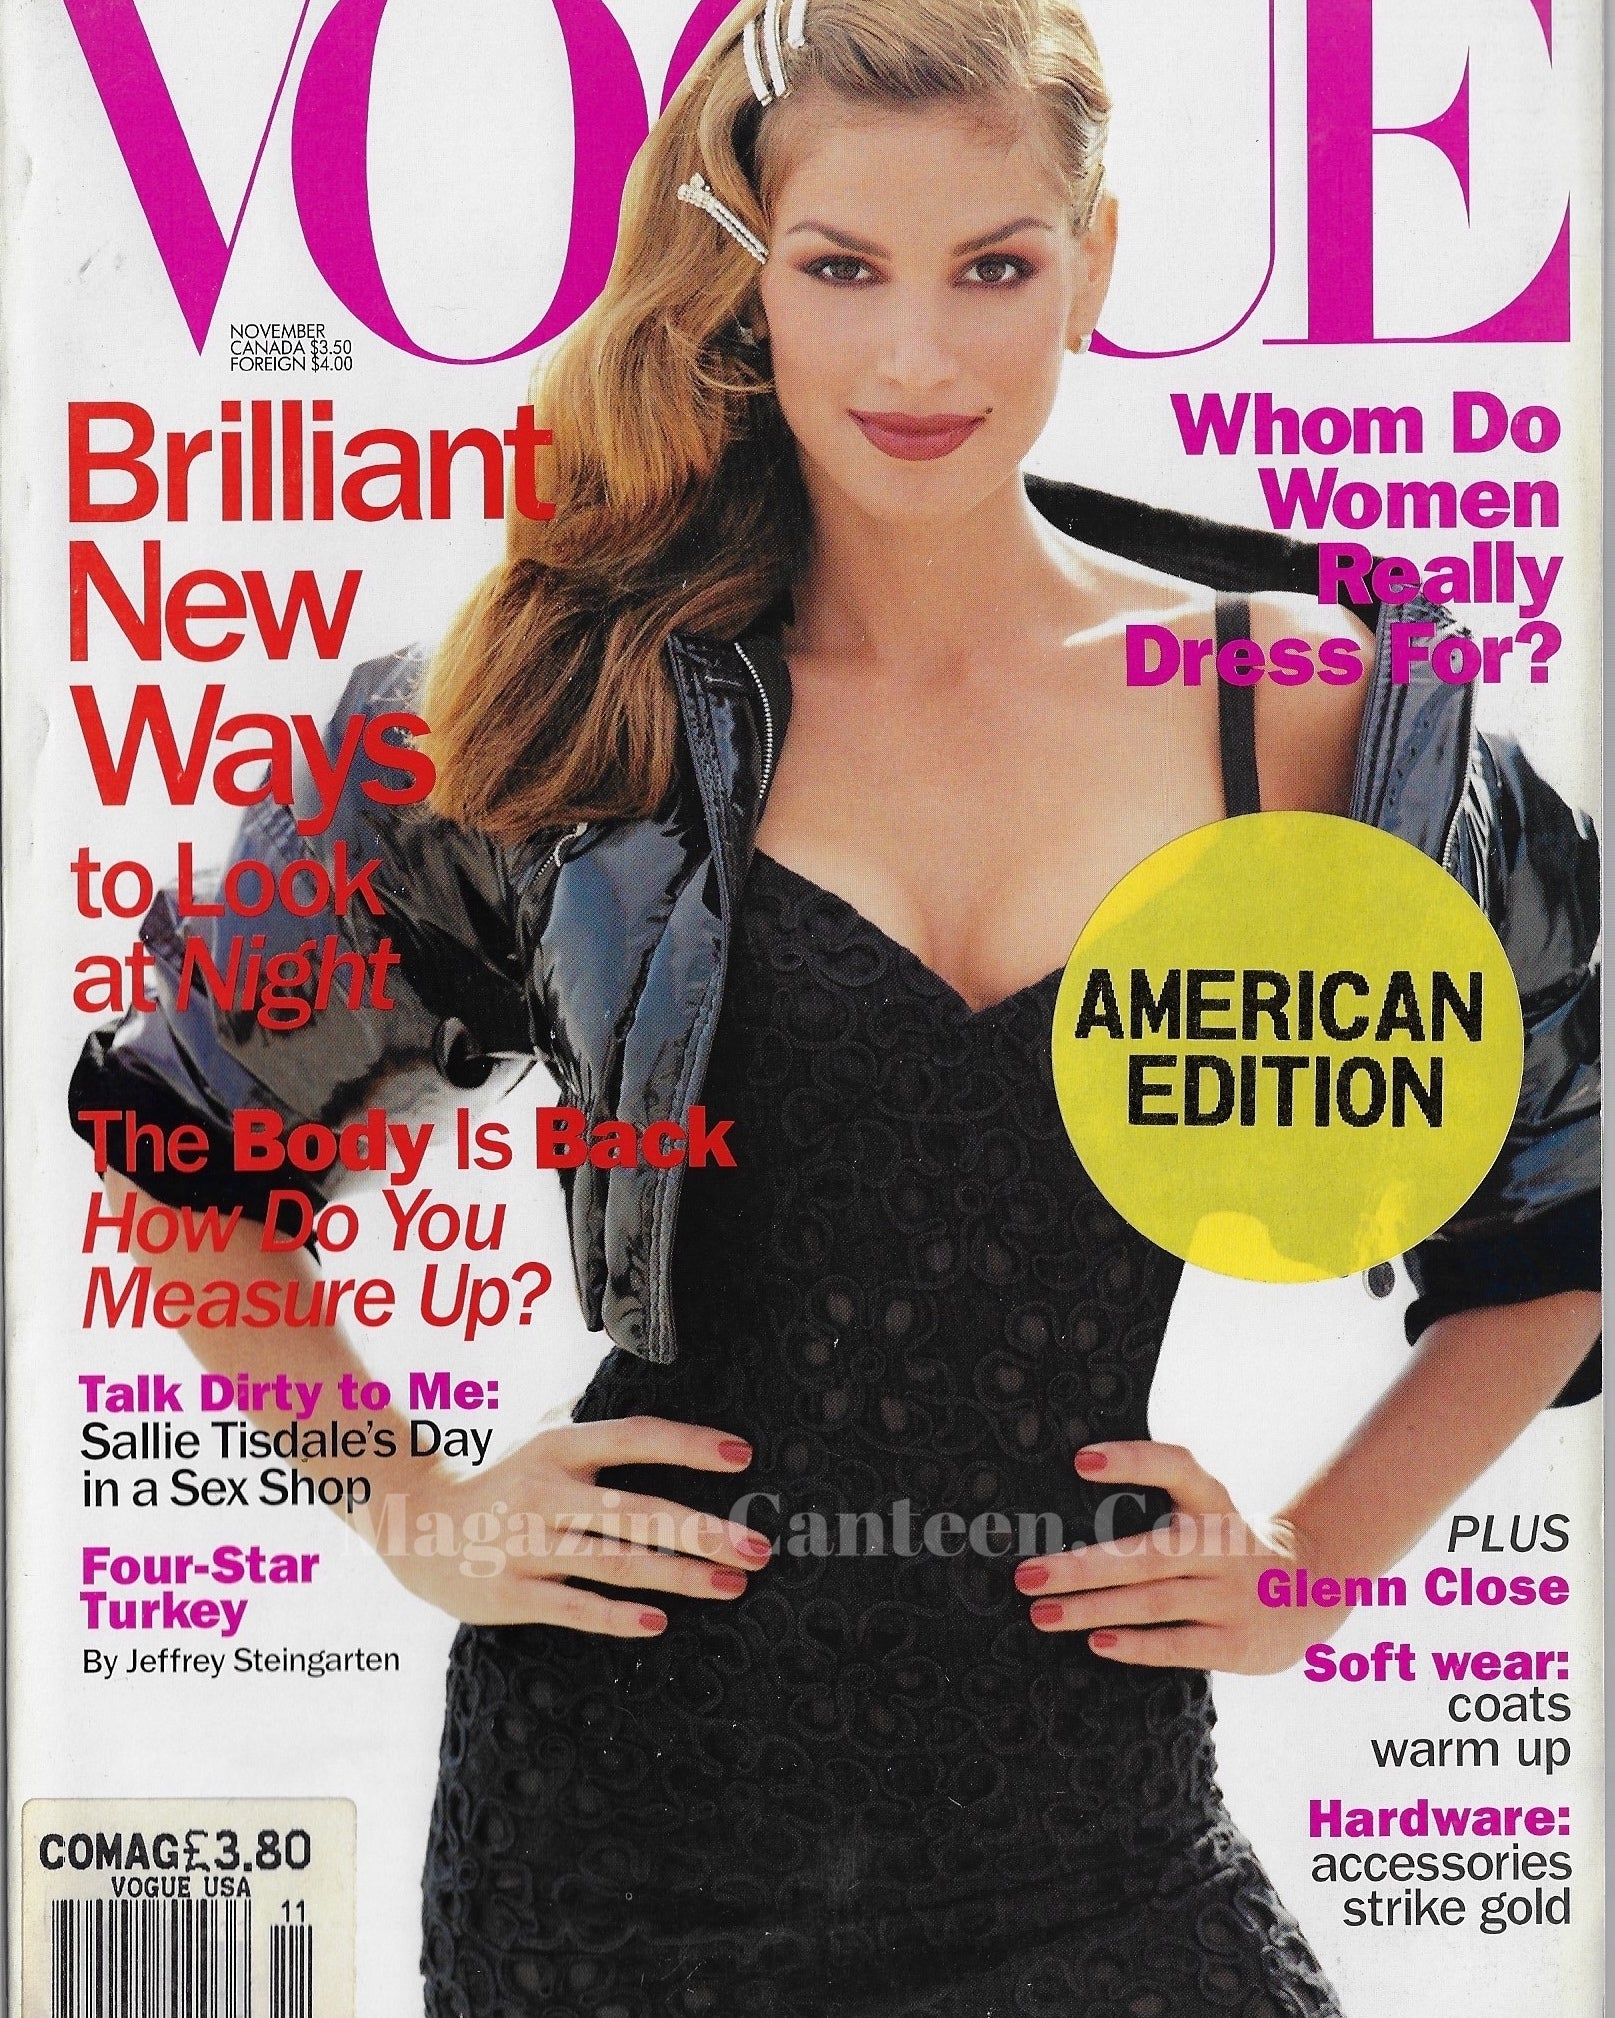 Vogue USA Magazine November 1994 - Cindy Crawford